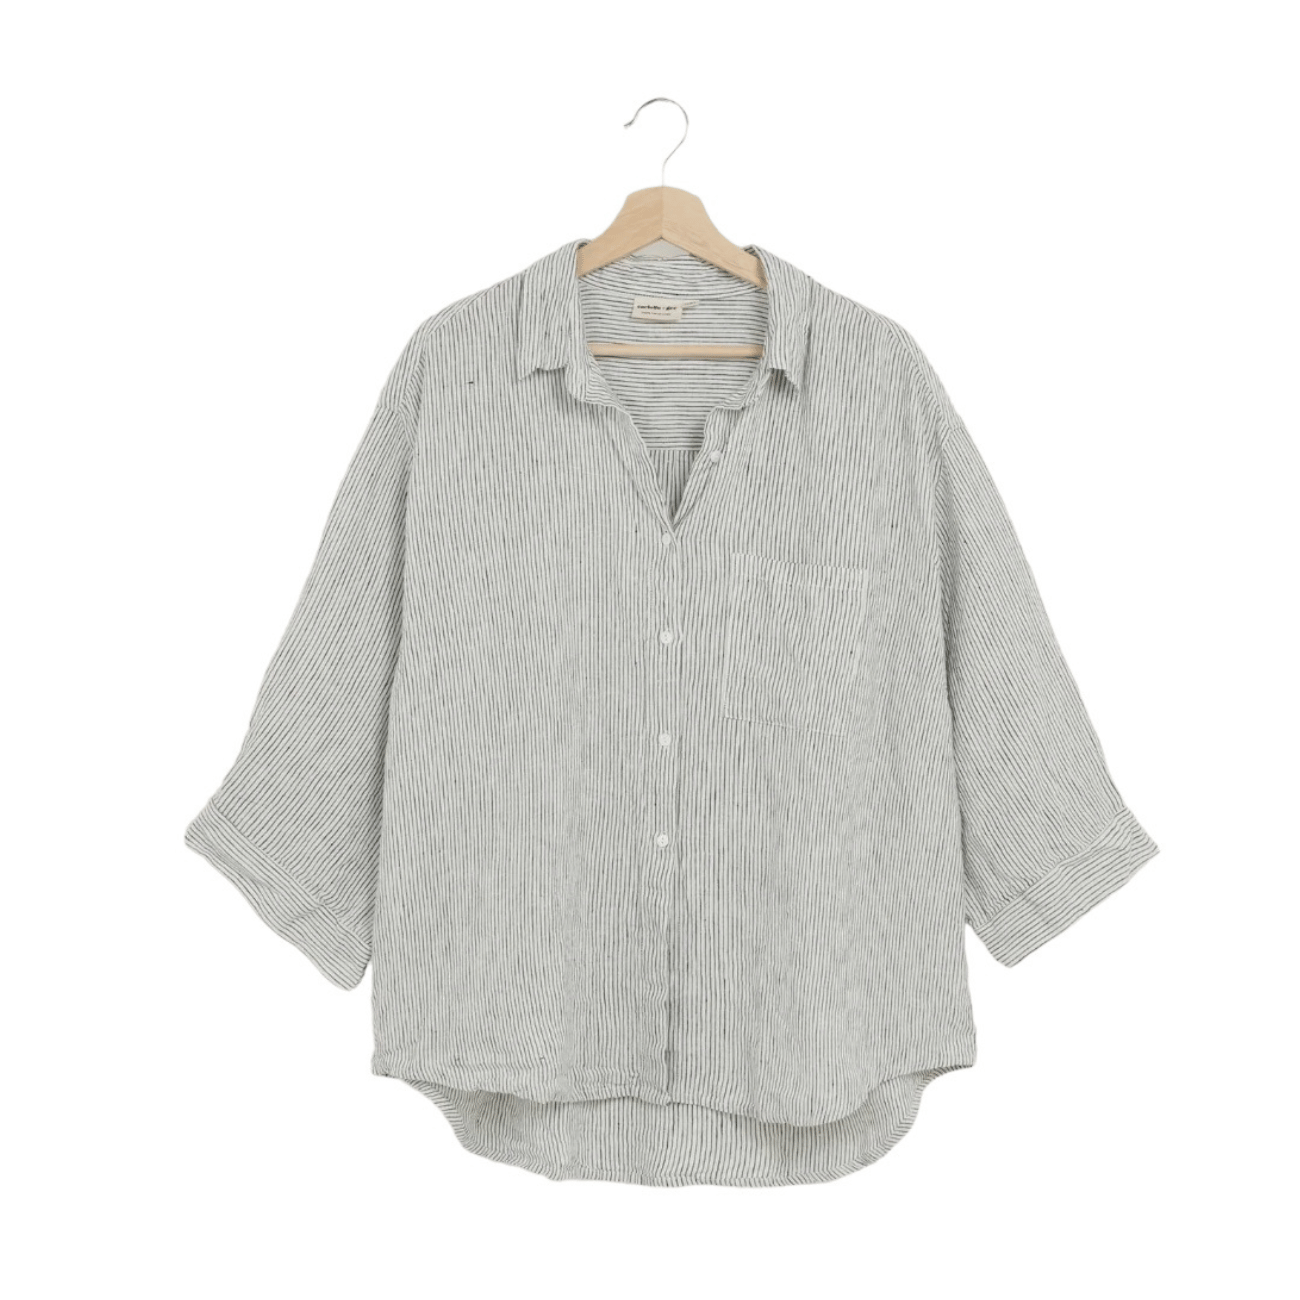 Carlotta & Gee - 100% Linen Pyjama Shirt in Pencil Stripes